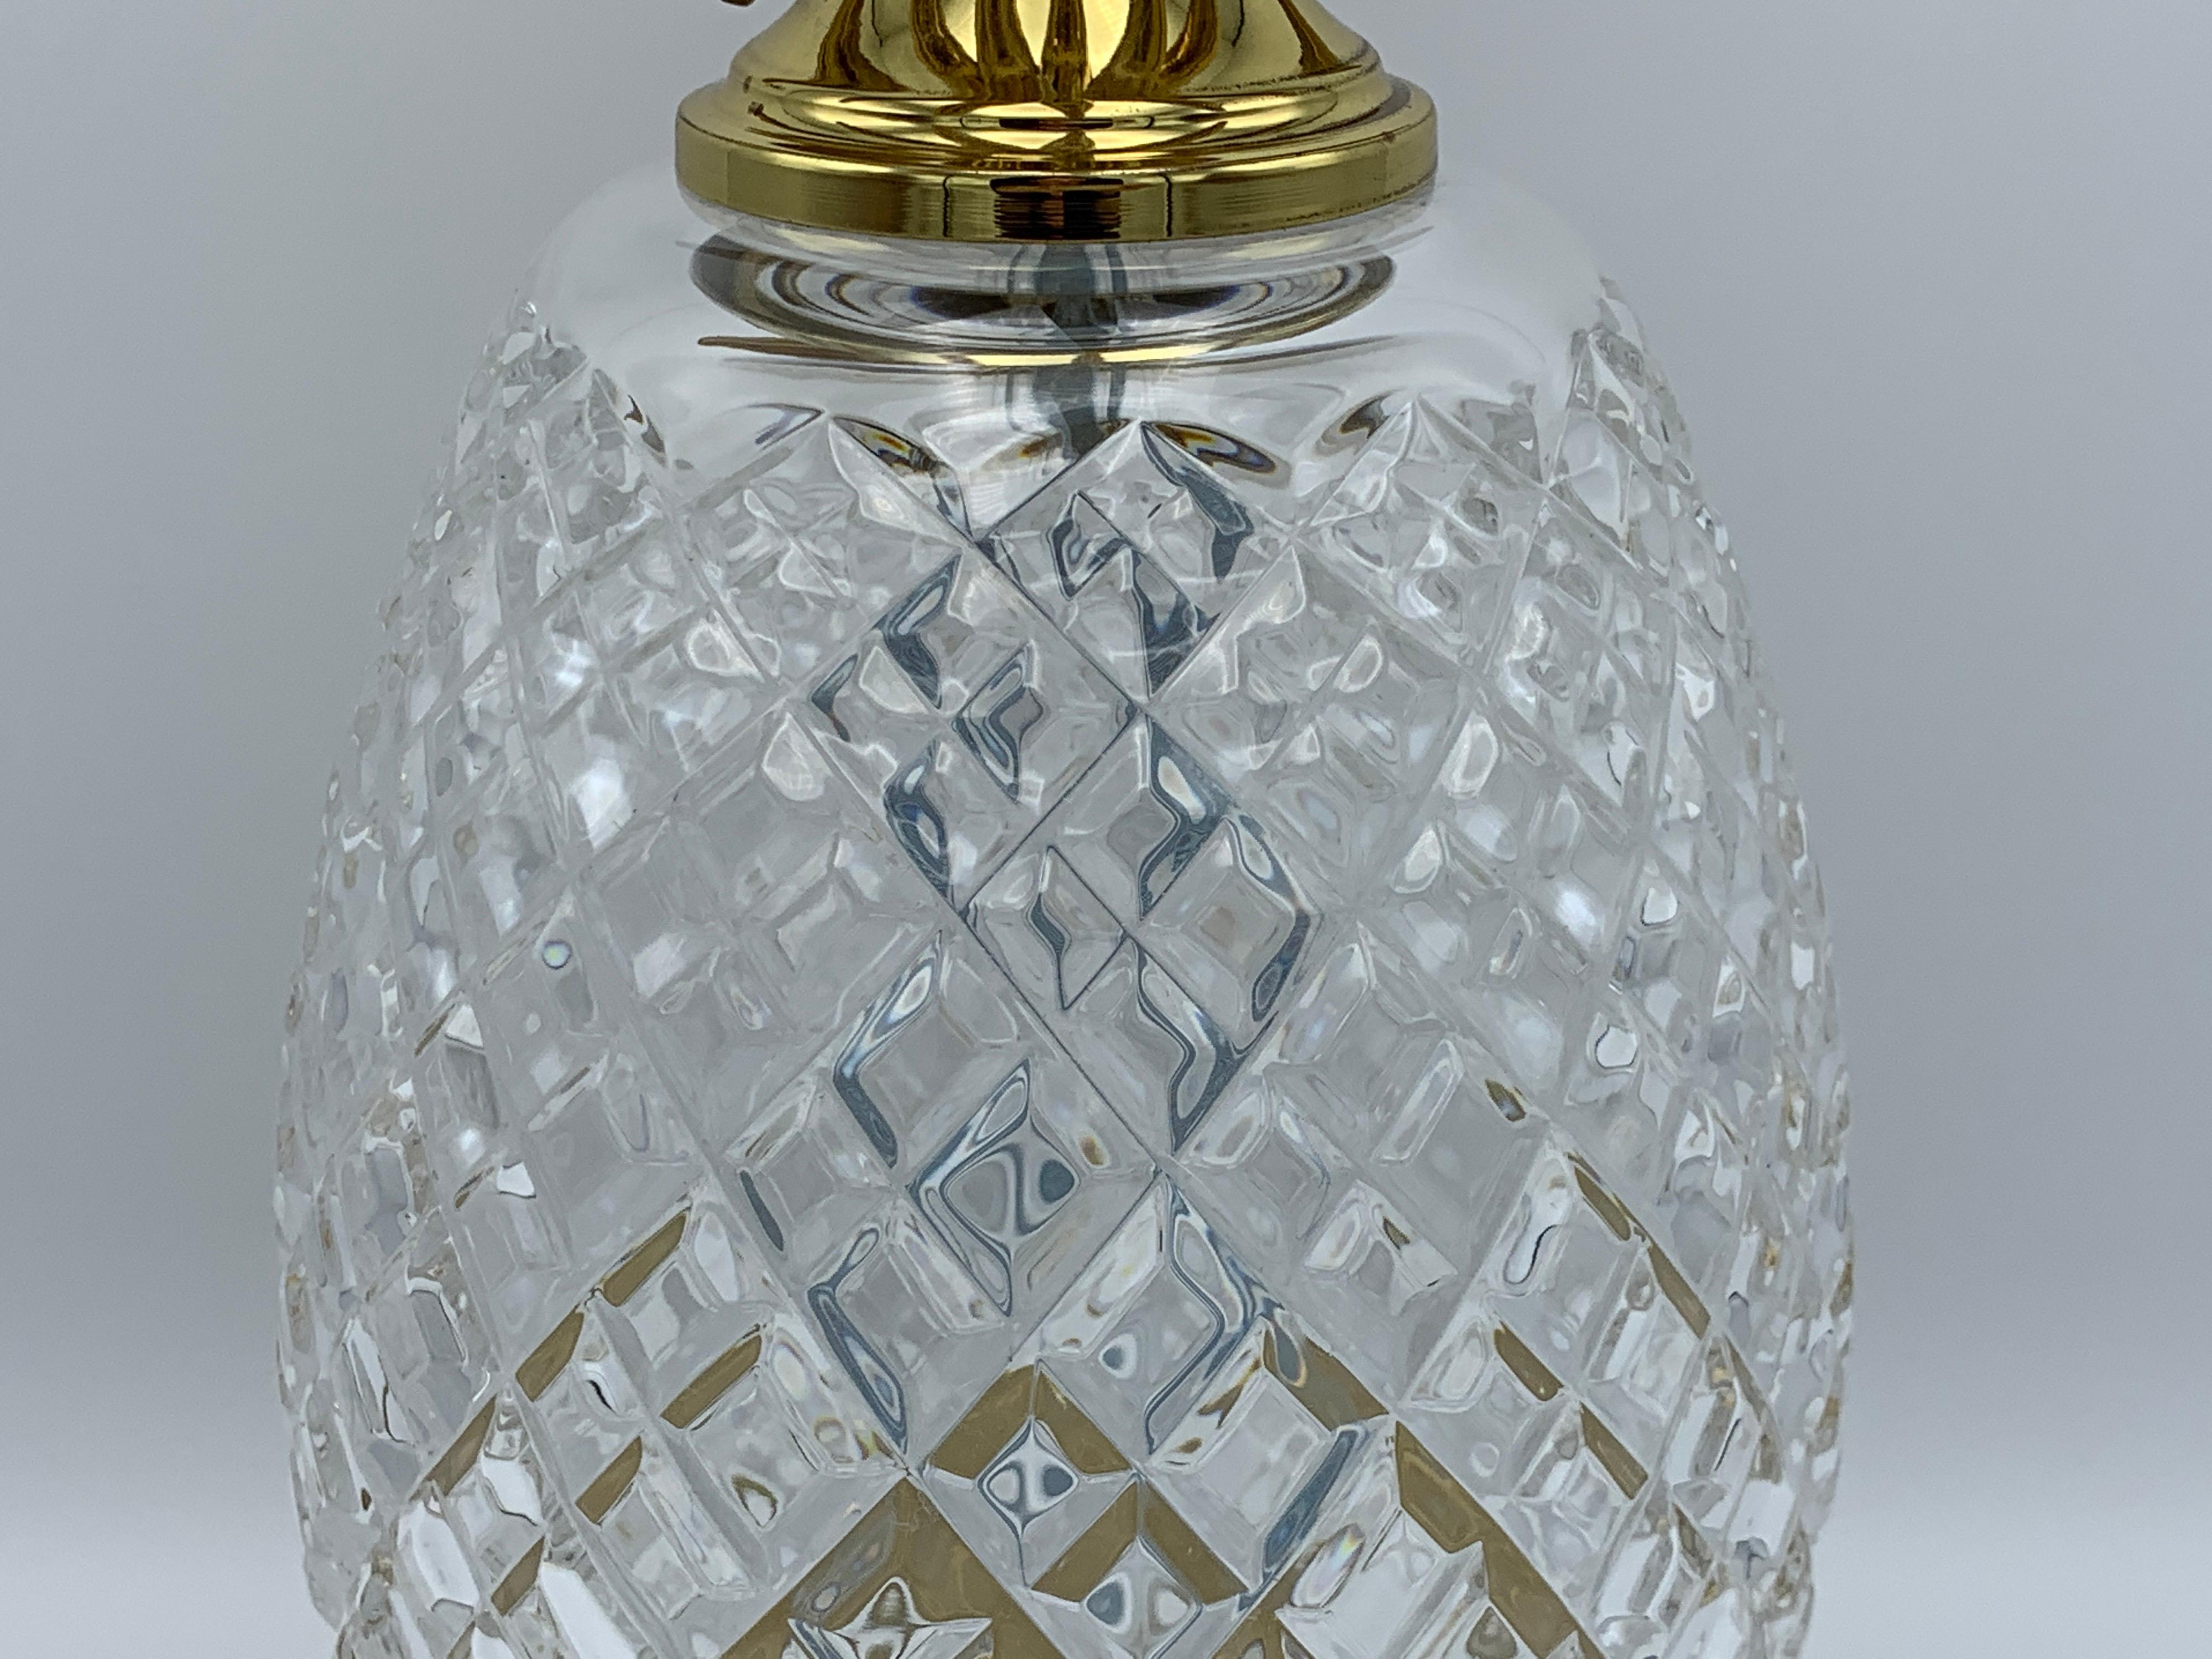 waterford pineapple lamp